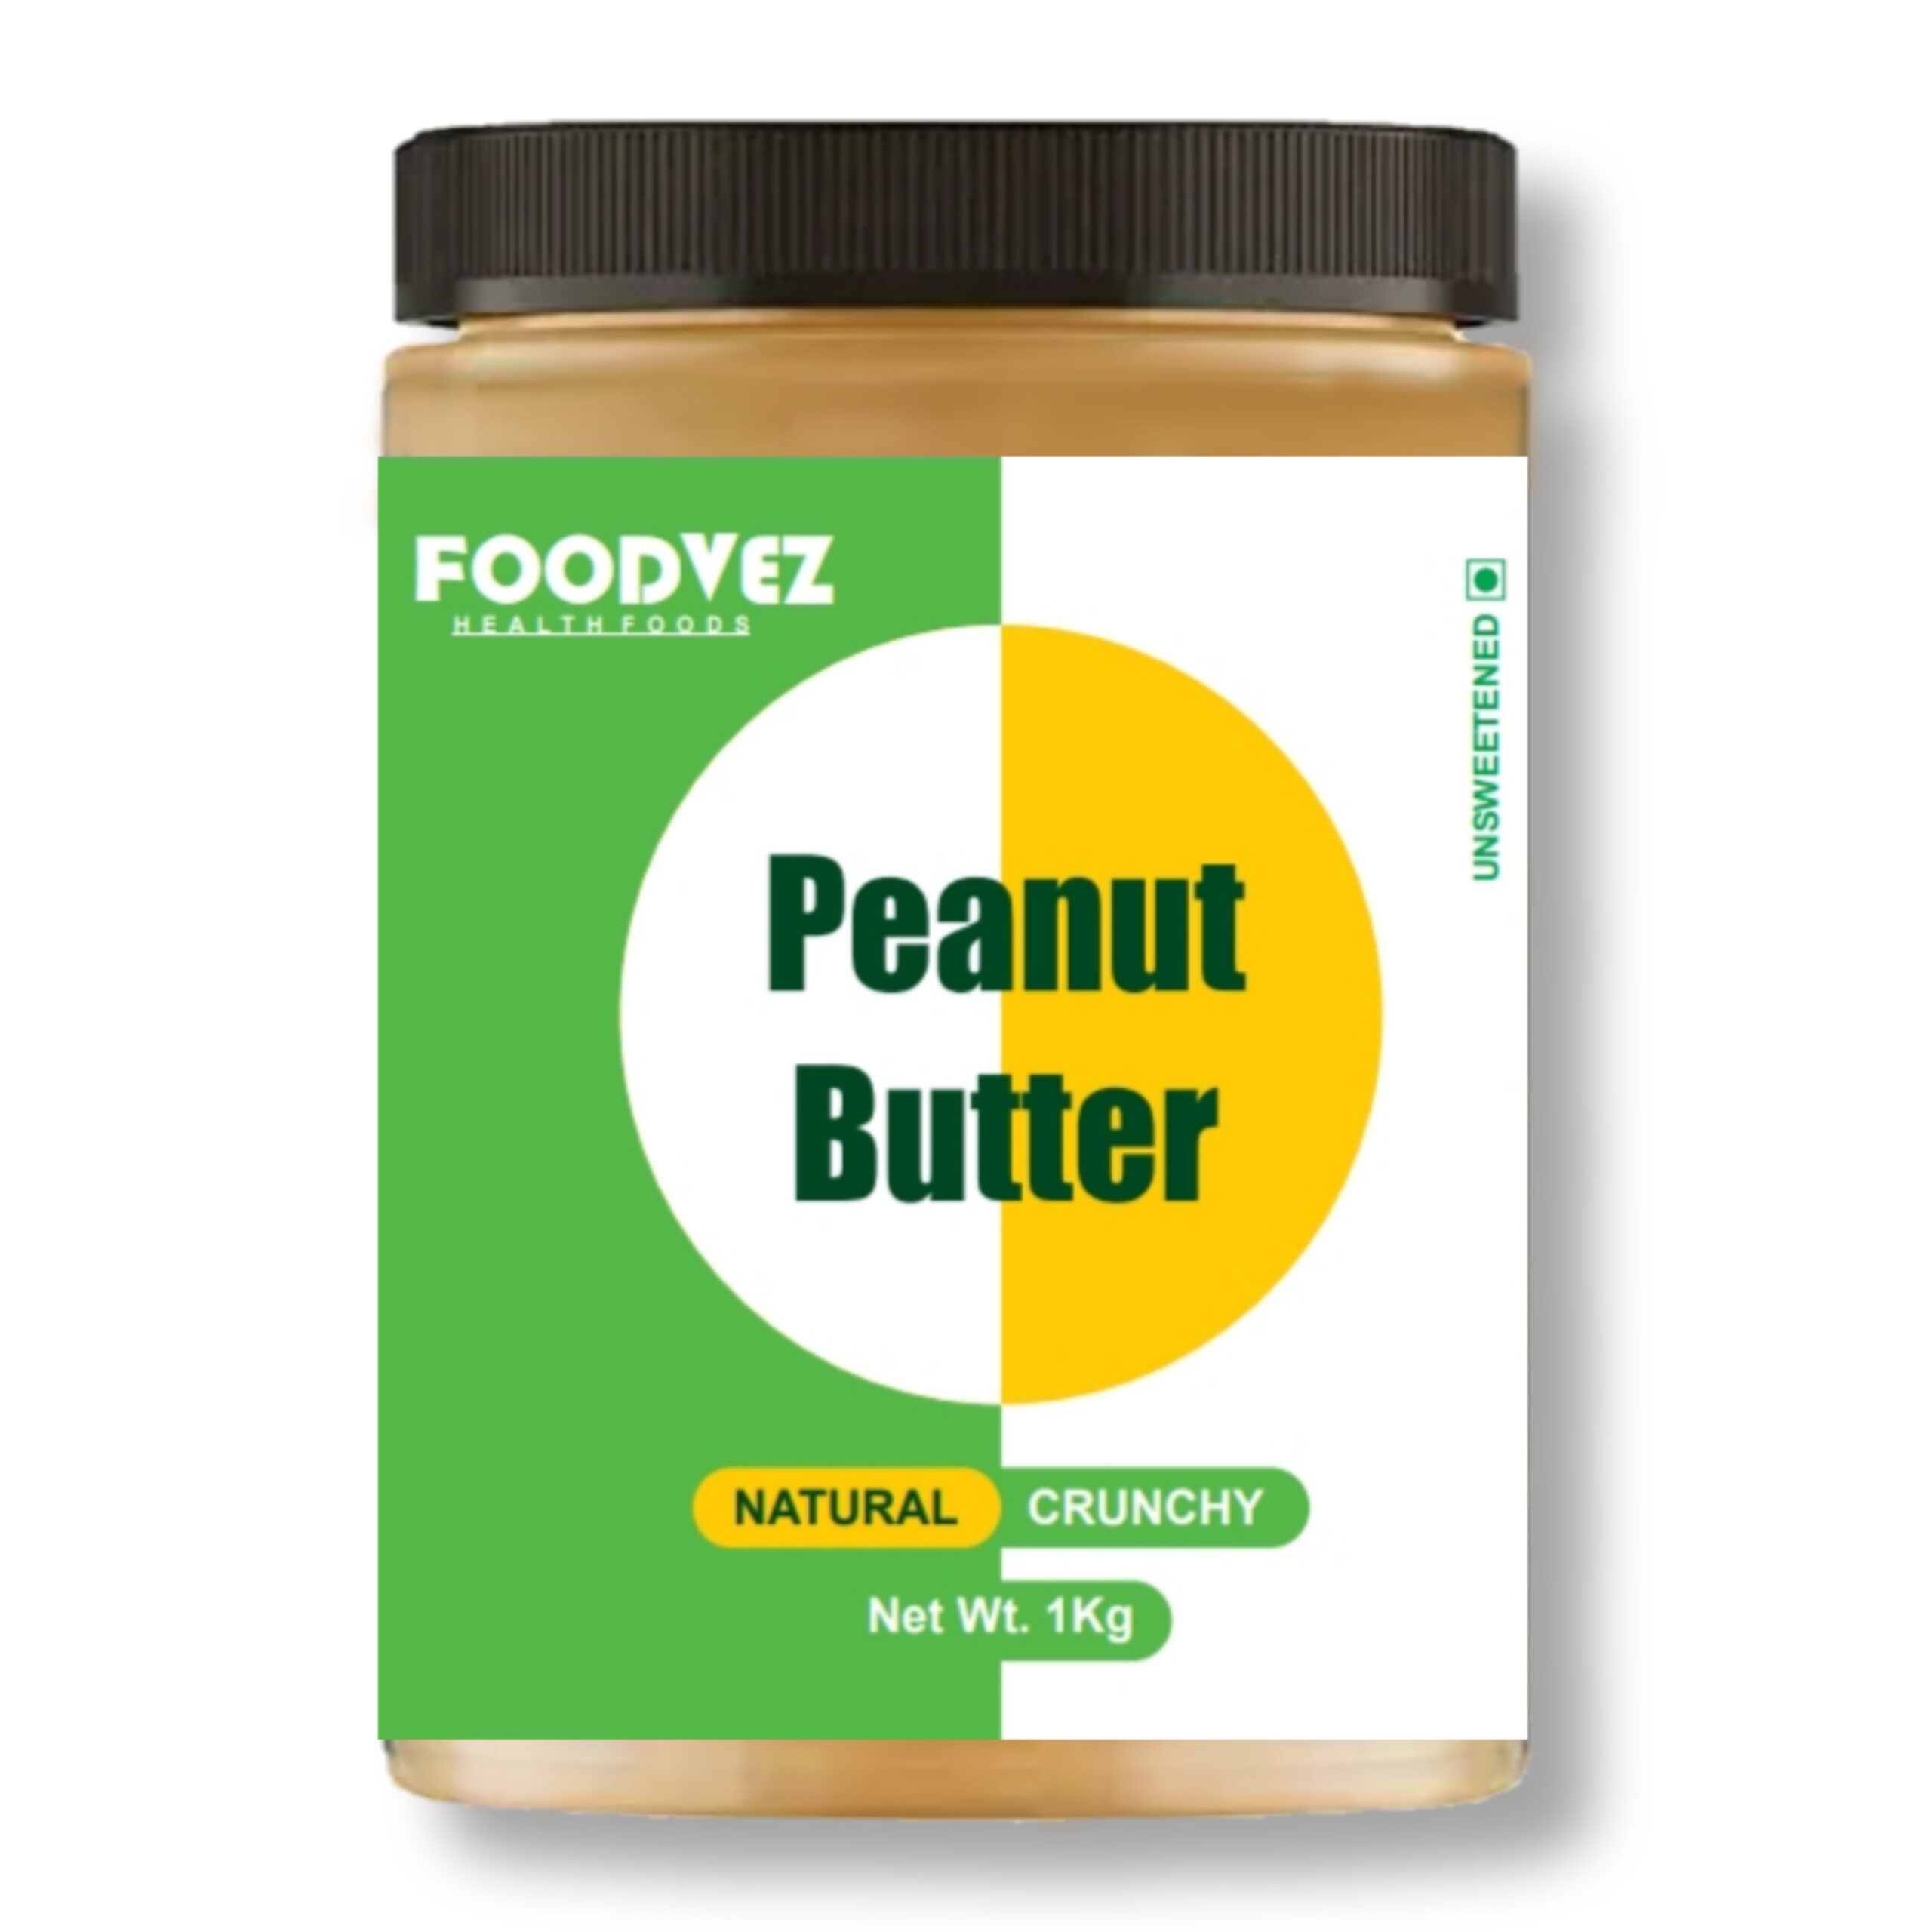 Foodvez Chocolate Natural Crunchy Peanut Butter 1kg